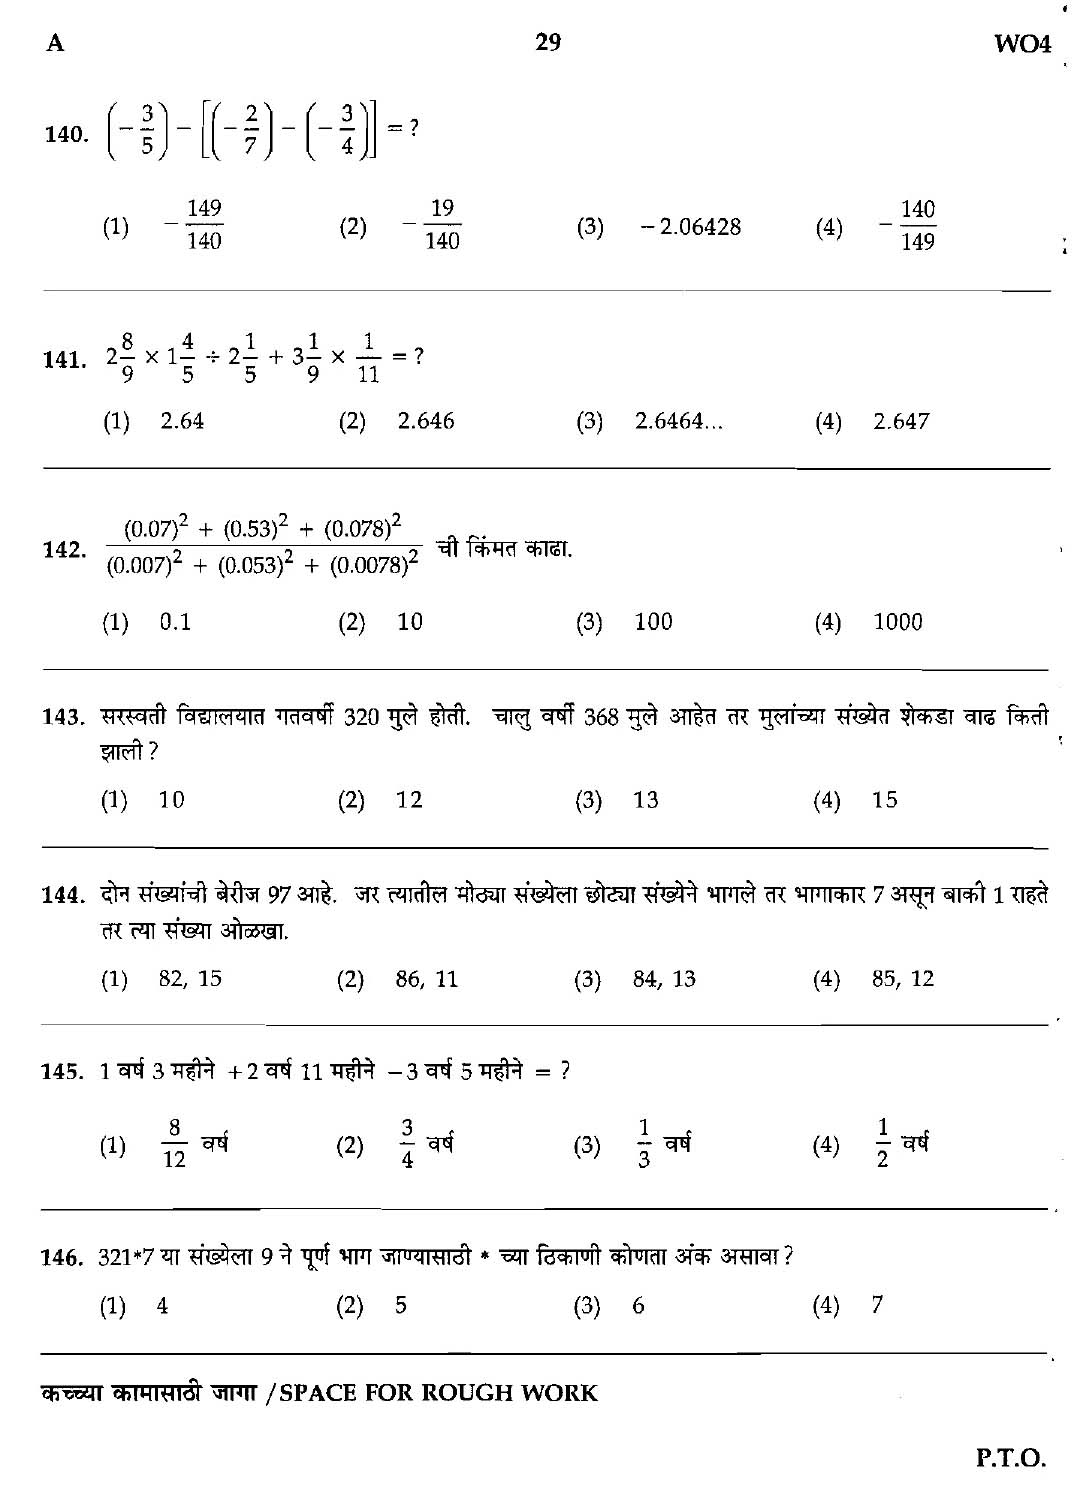 Maharashtra PSC Clerk Typist Exam Question Paper 2014 28